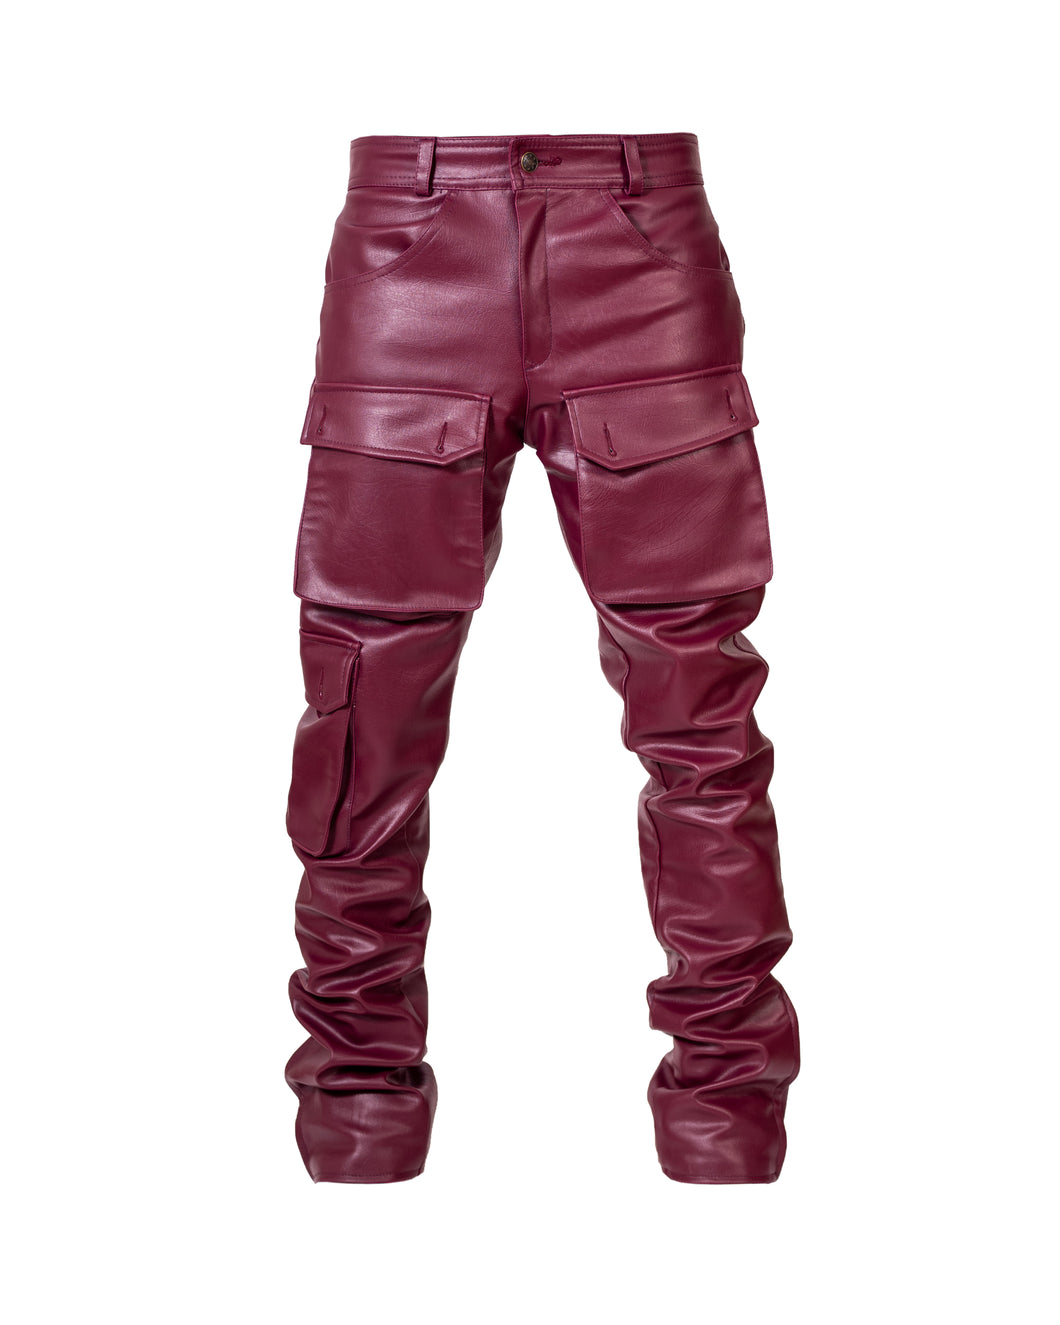 Wine leather cargo pants